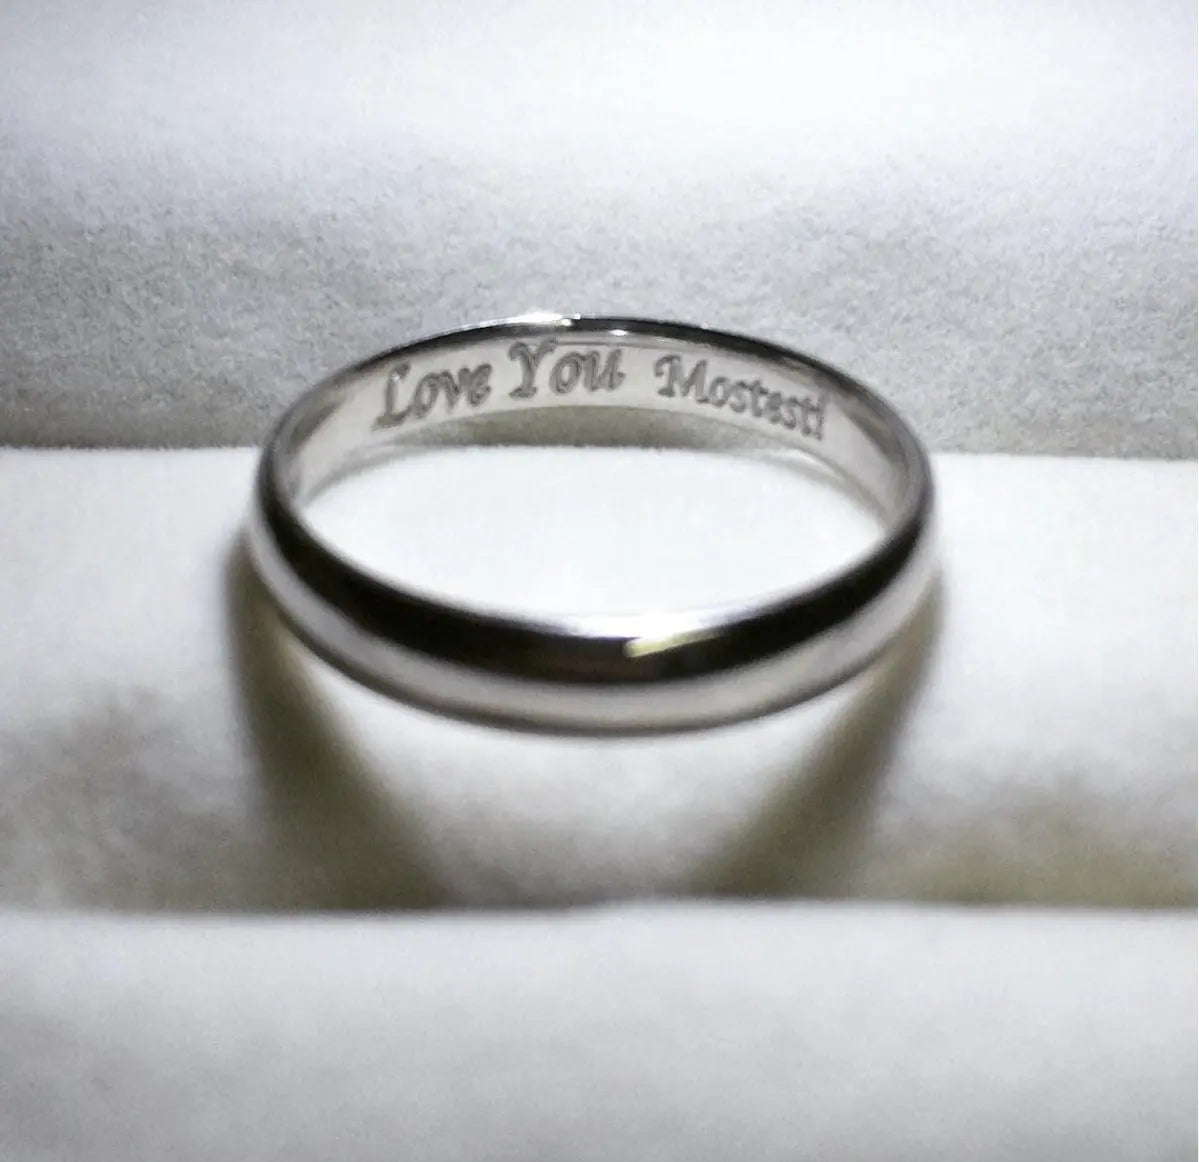 Personalized Wedding Ring Bearer Box Customized Rings Holder Engagement  Wooden | eBay